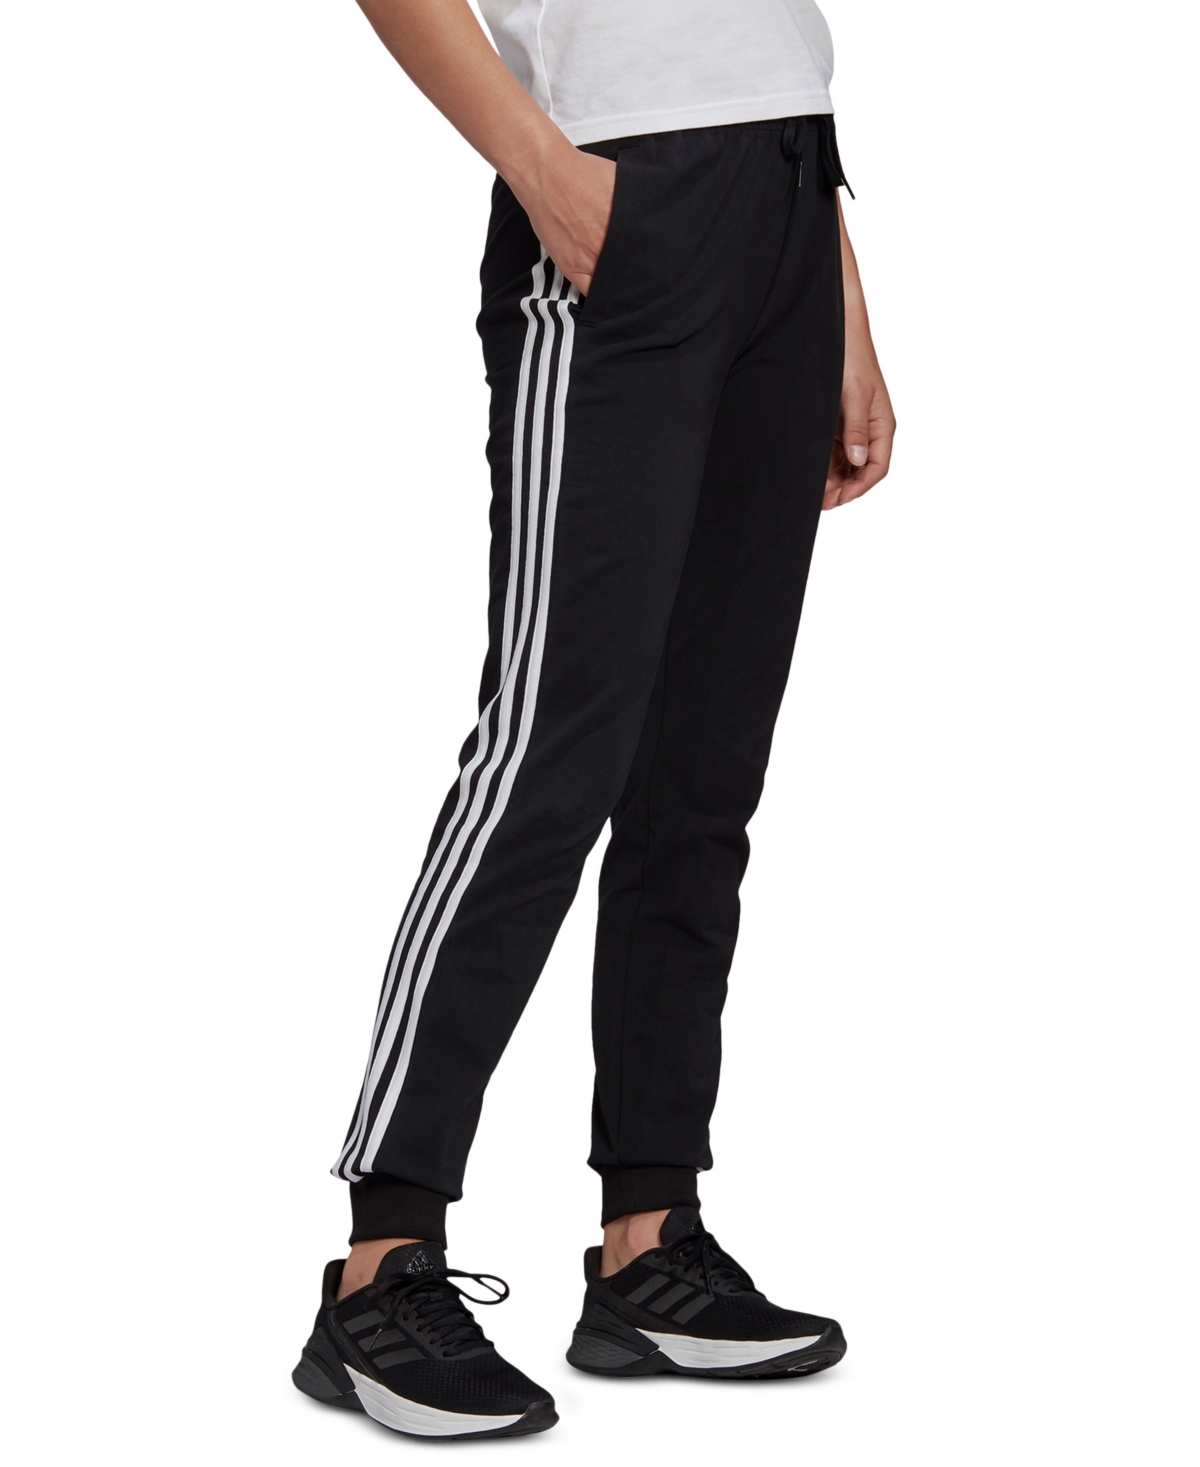  adidas Women's Essentials 3-Stripes Pants